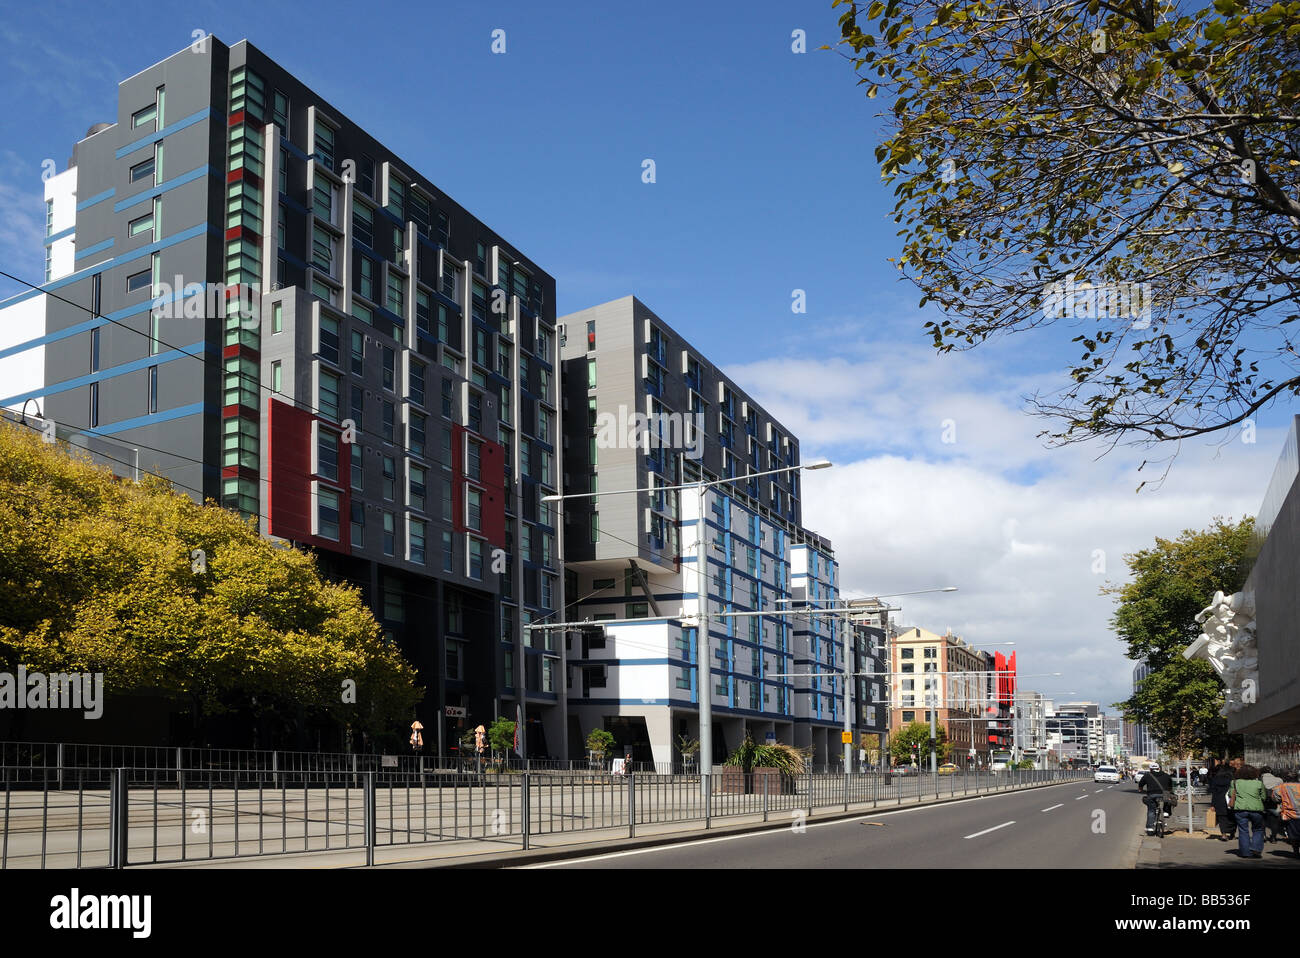 Tall modern buildings office blocks flats apartments Swanston Street Melbourne Australia Stock Photo